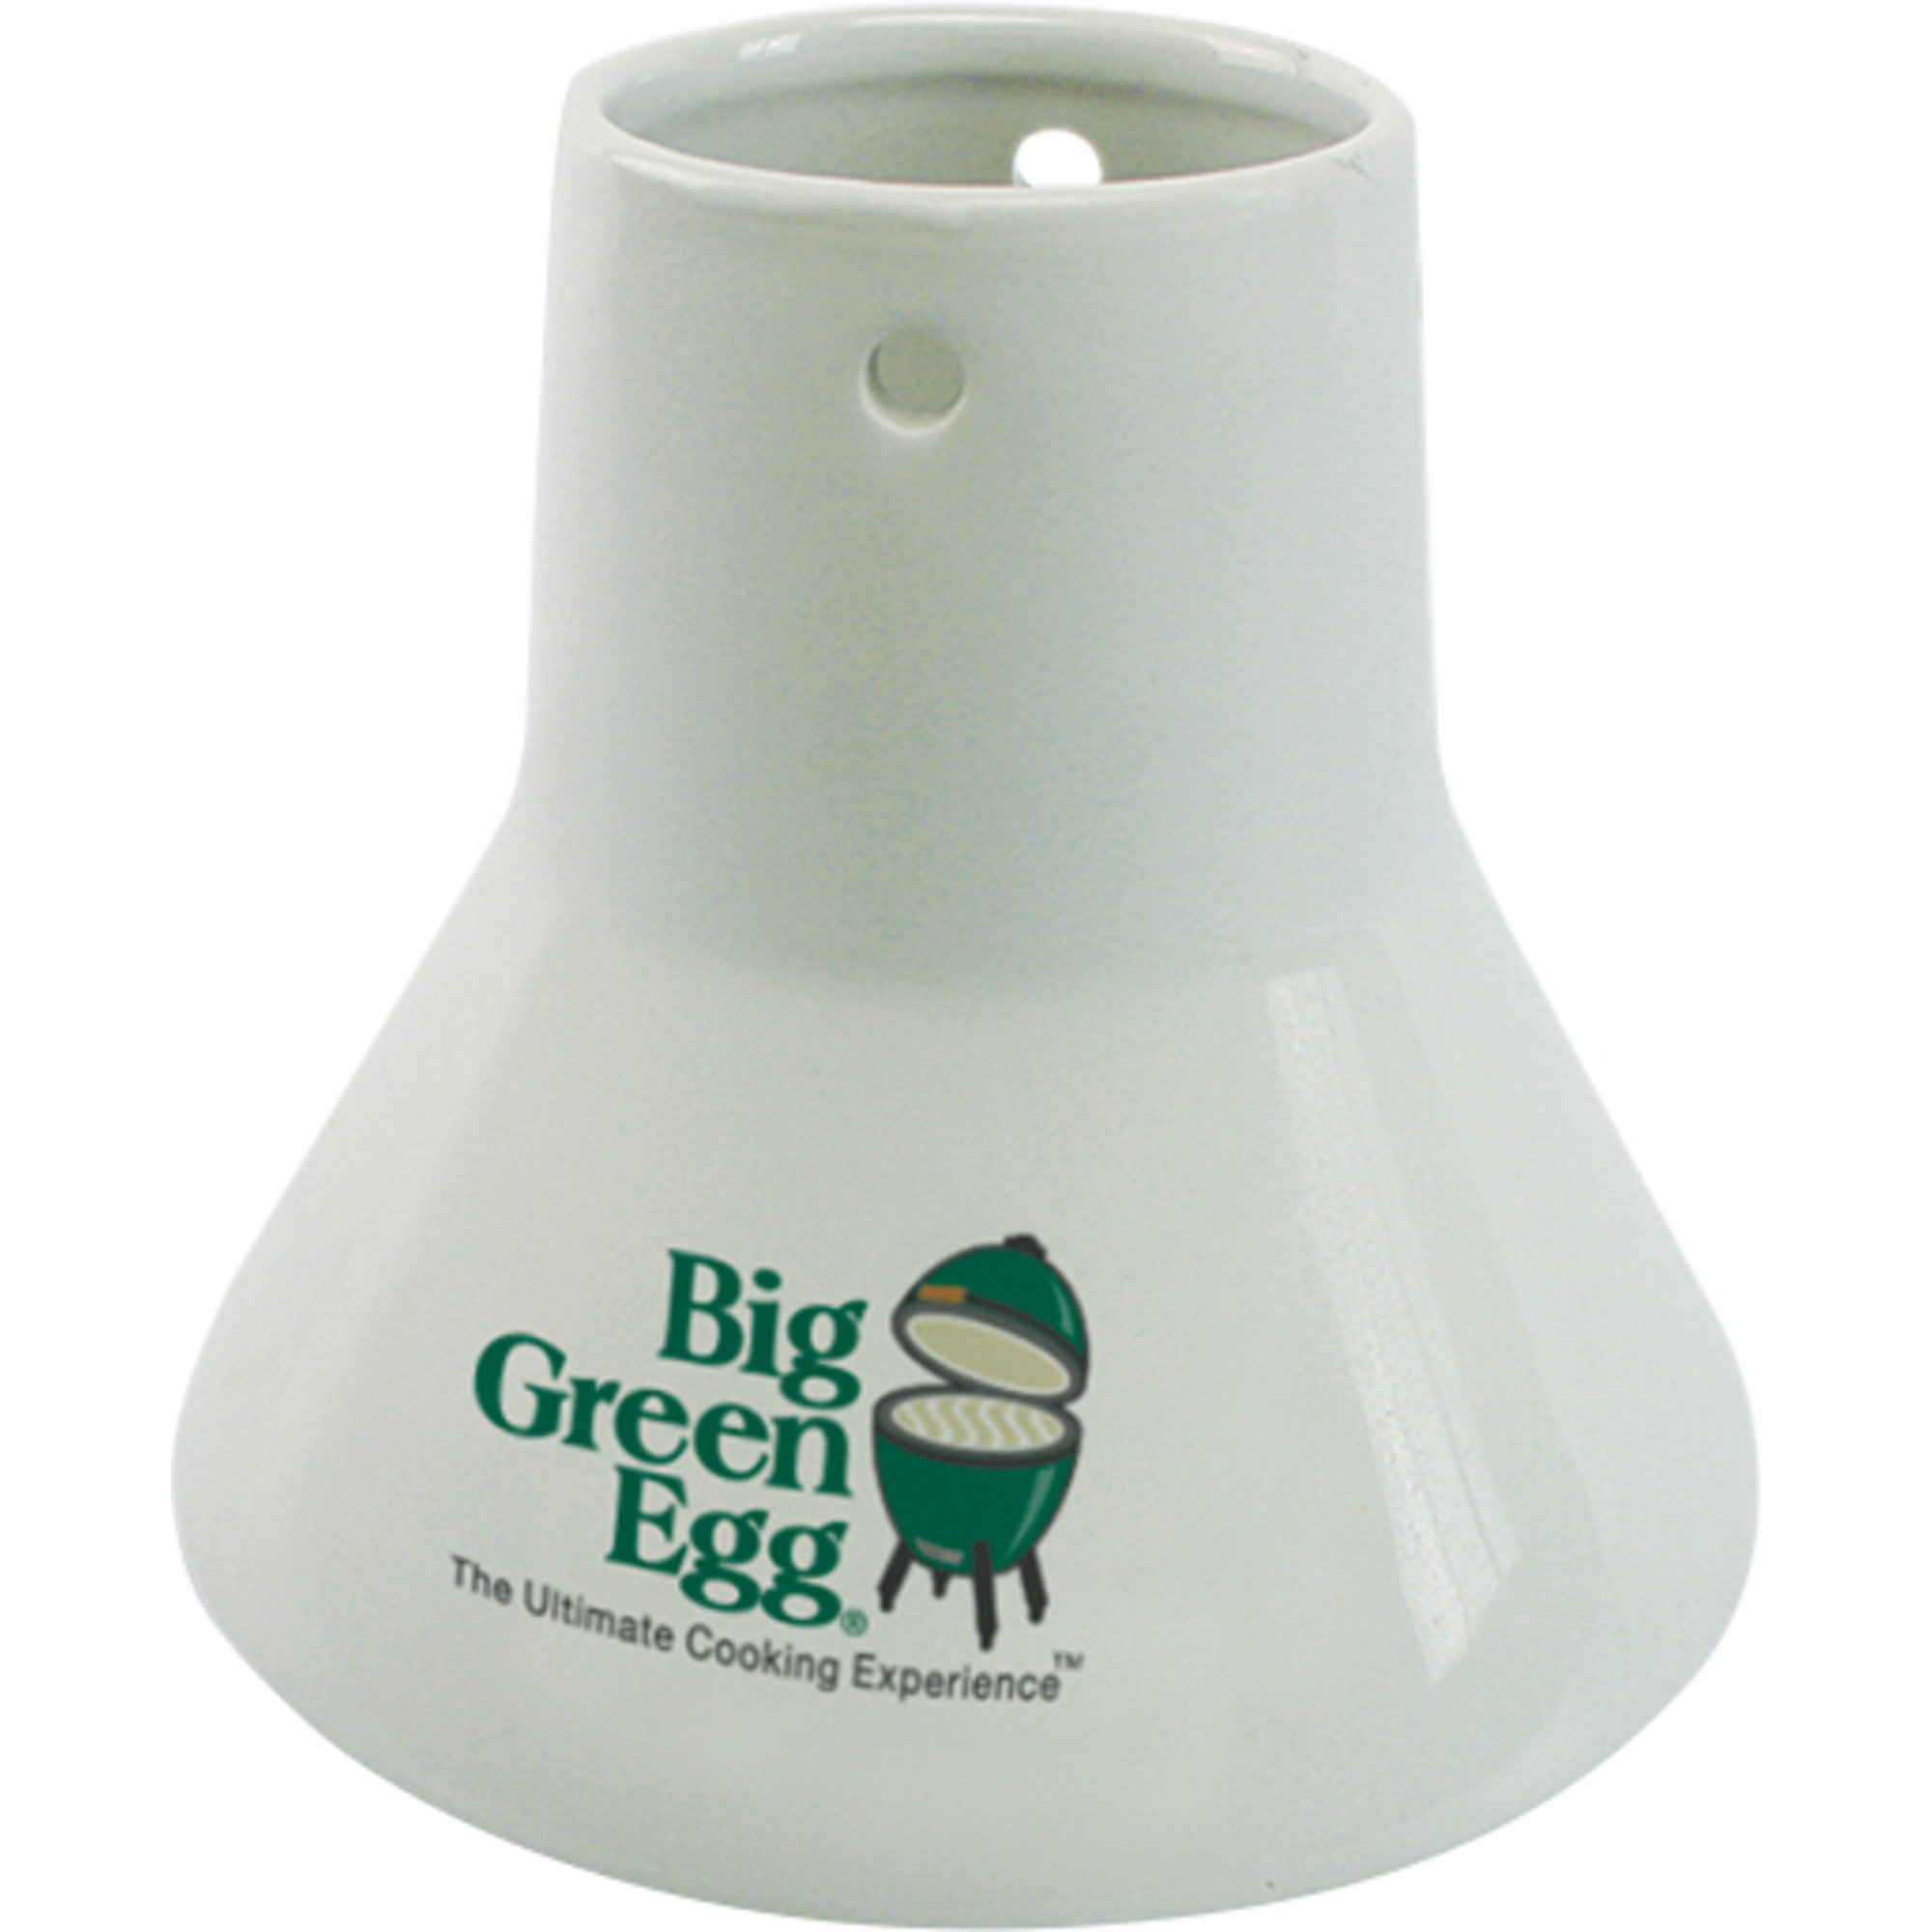 Big Green Egg Poultry Roaster kycklinghållare i keramik